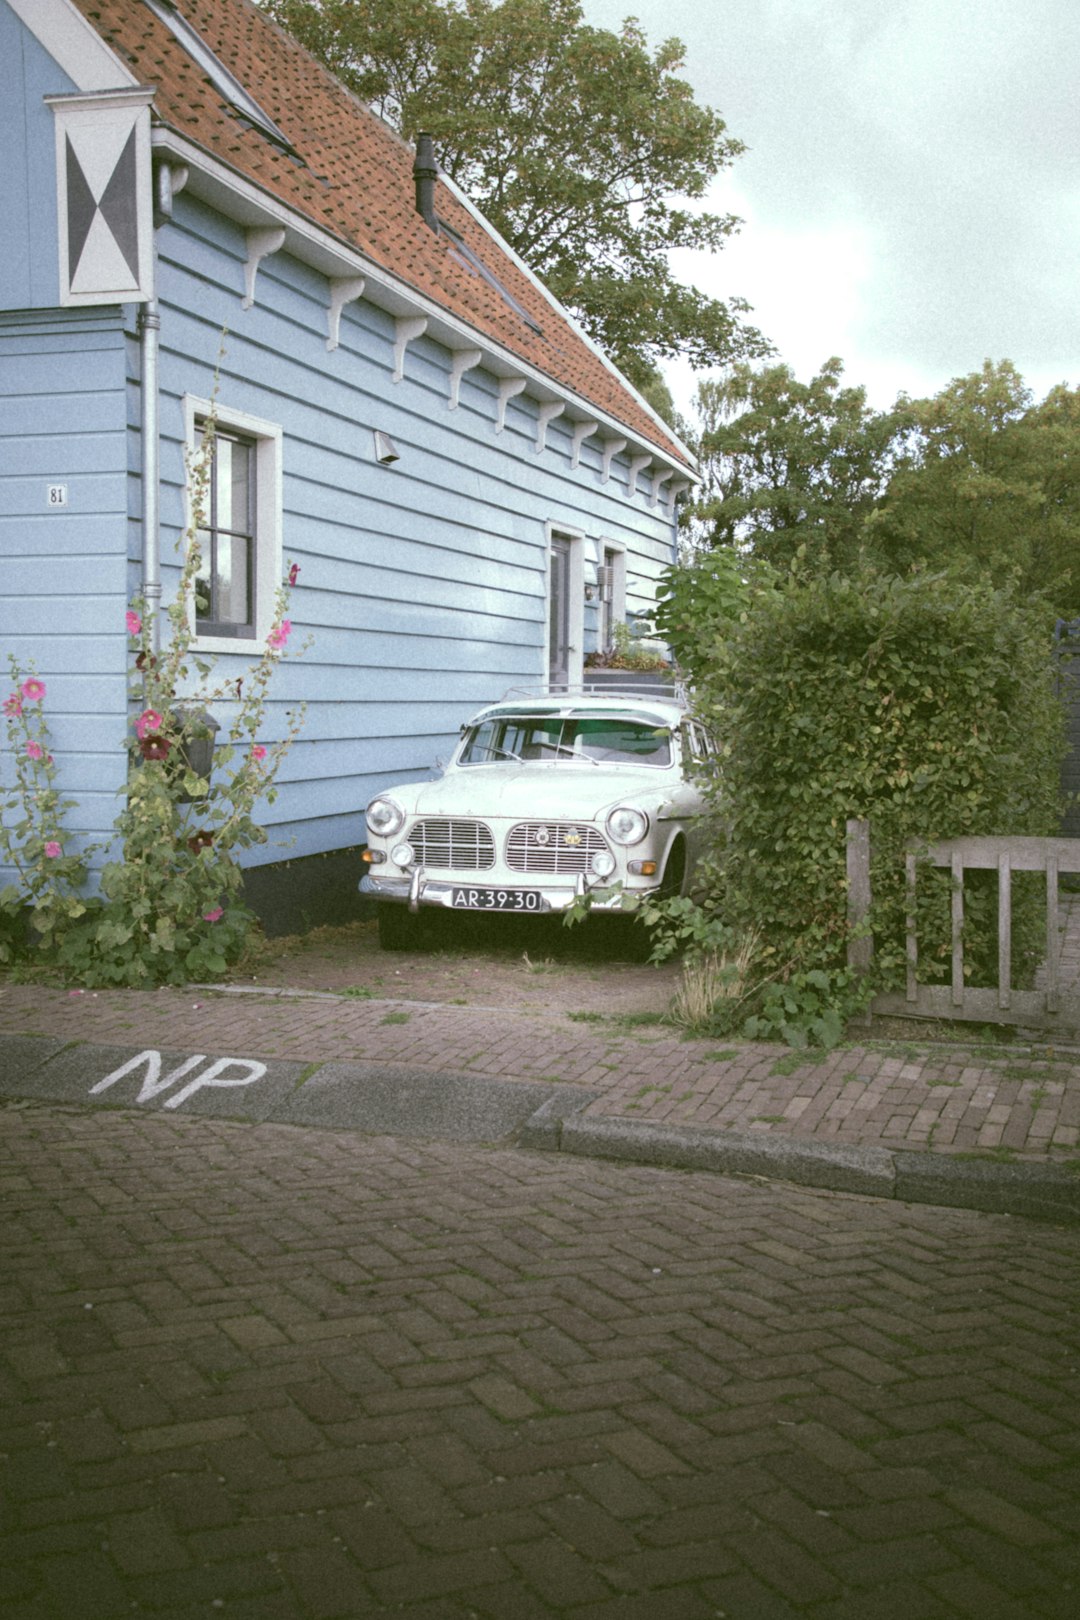 Cottage photo spot Durgerdam Zaans Museum